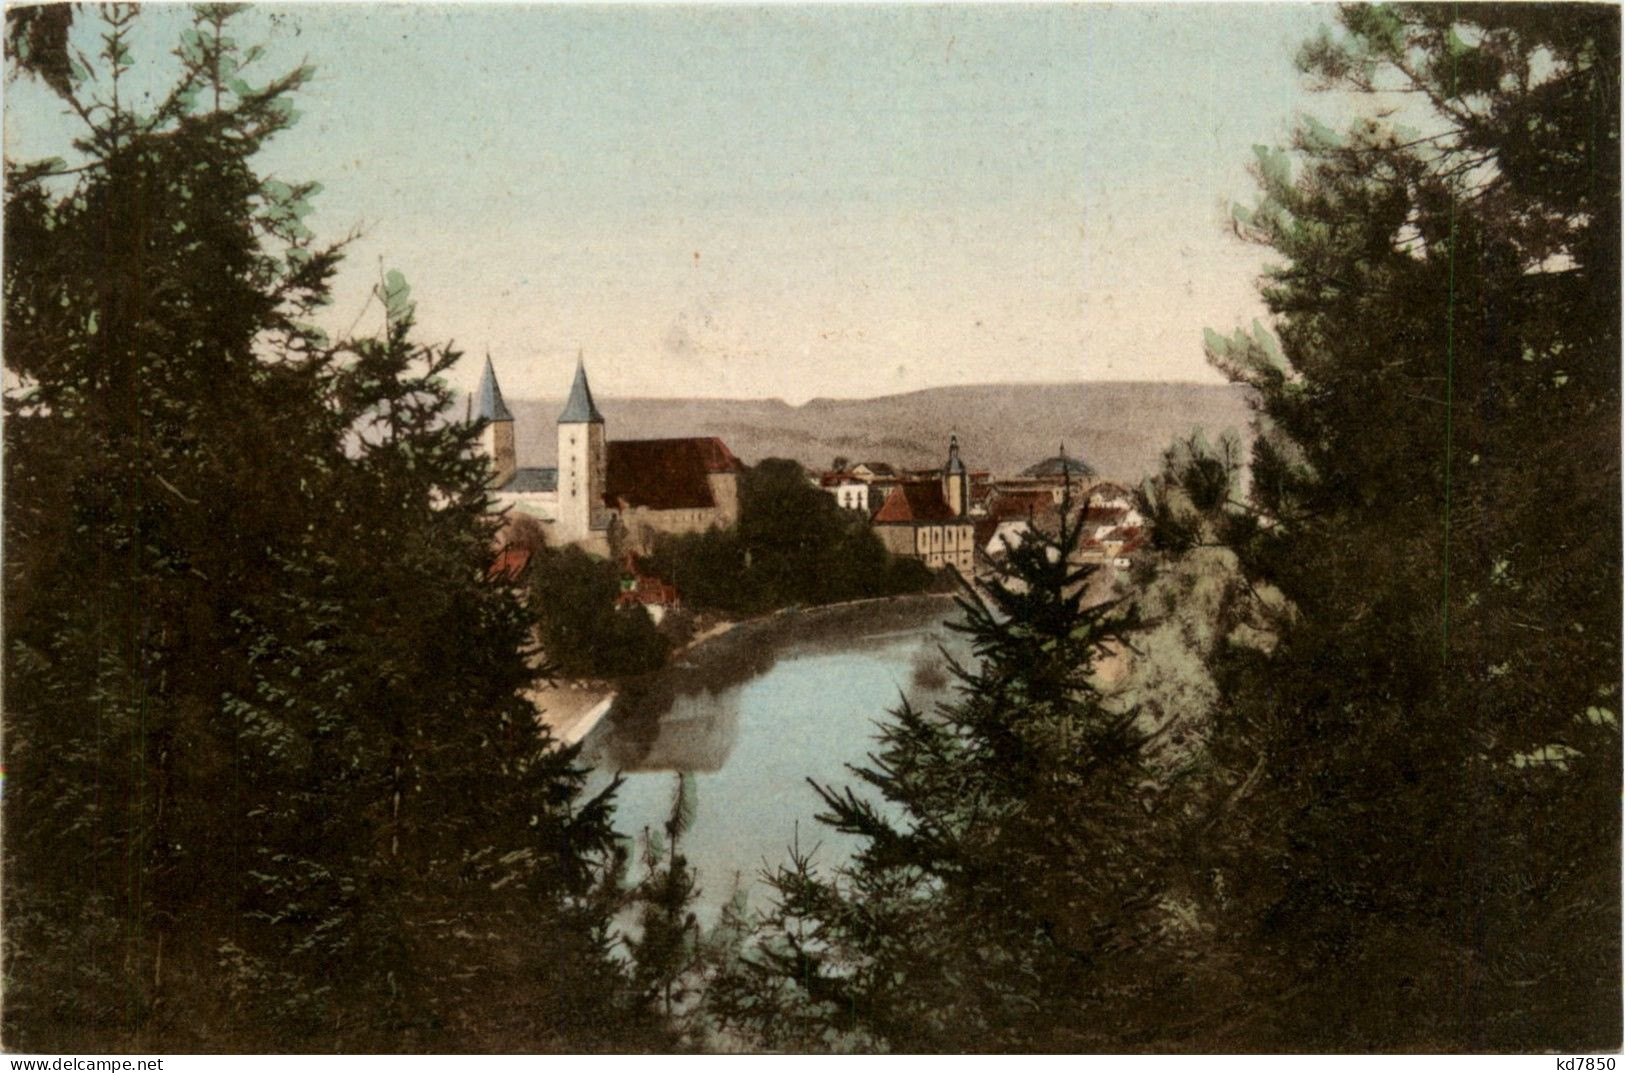 Rochsburg An Der Mulde - Lunzenau